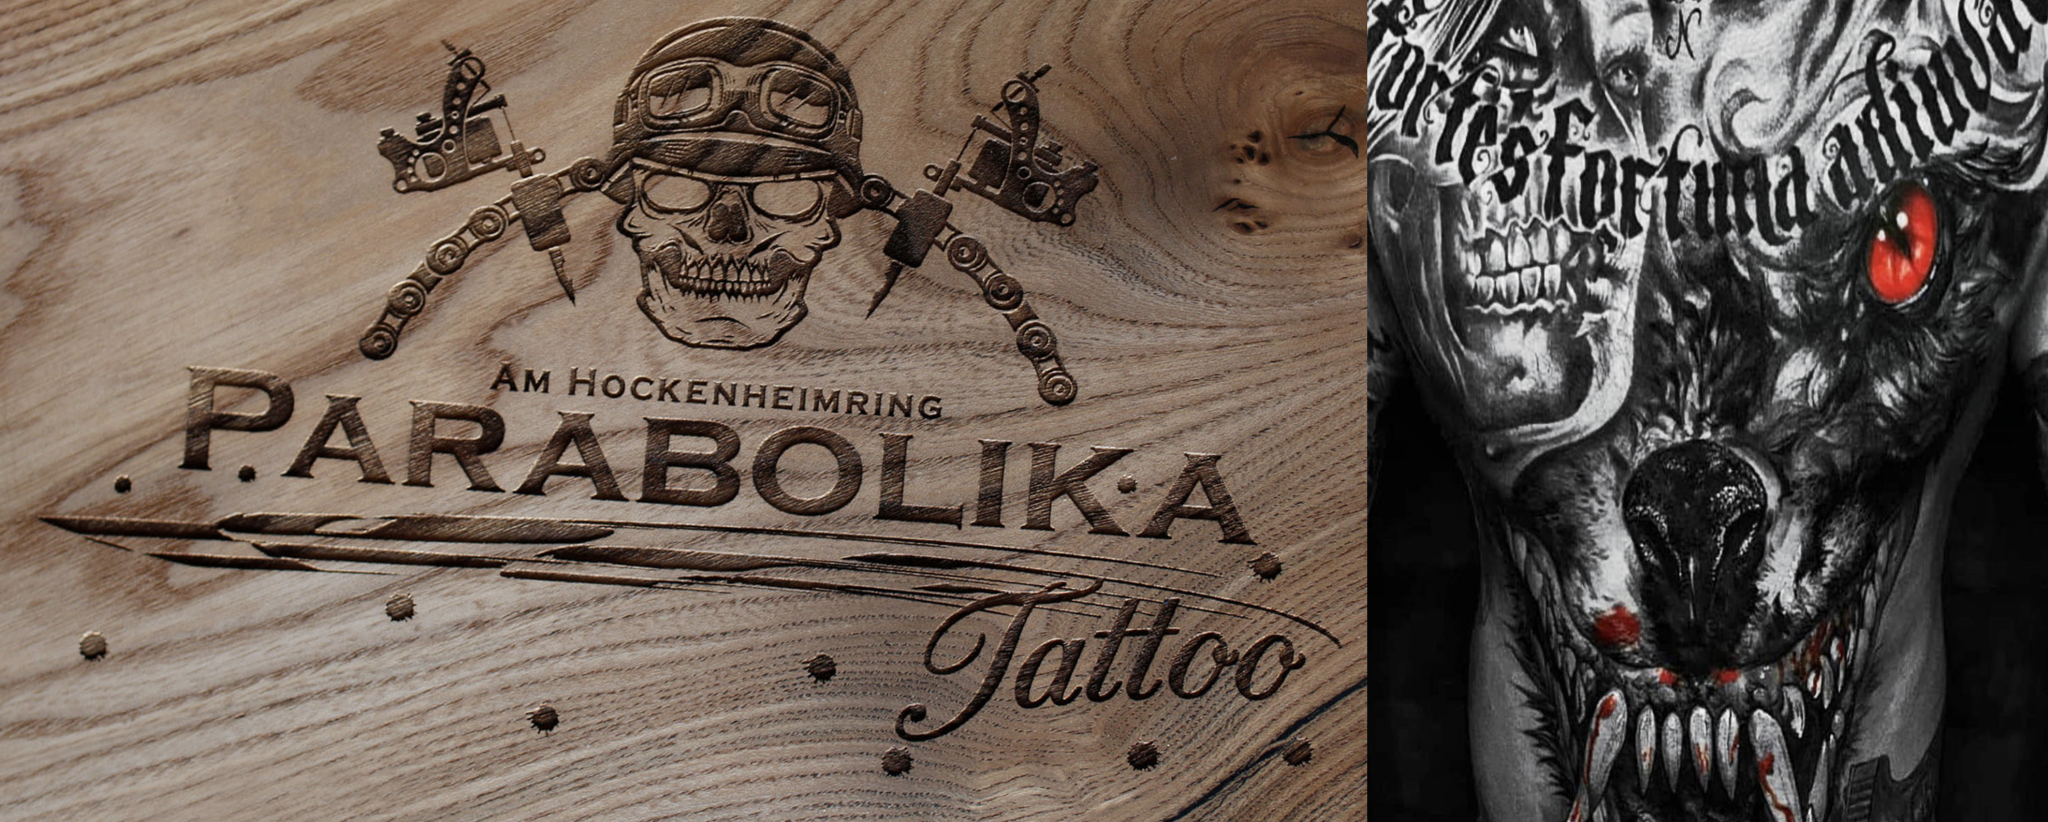 Parabolika Tattoo Studio Tattoo Piecing am Hockenheimring